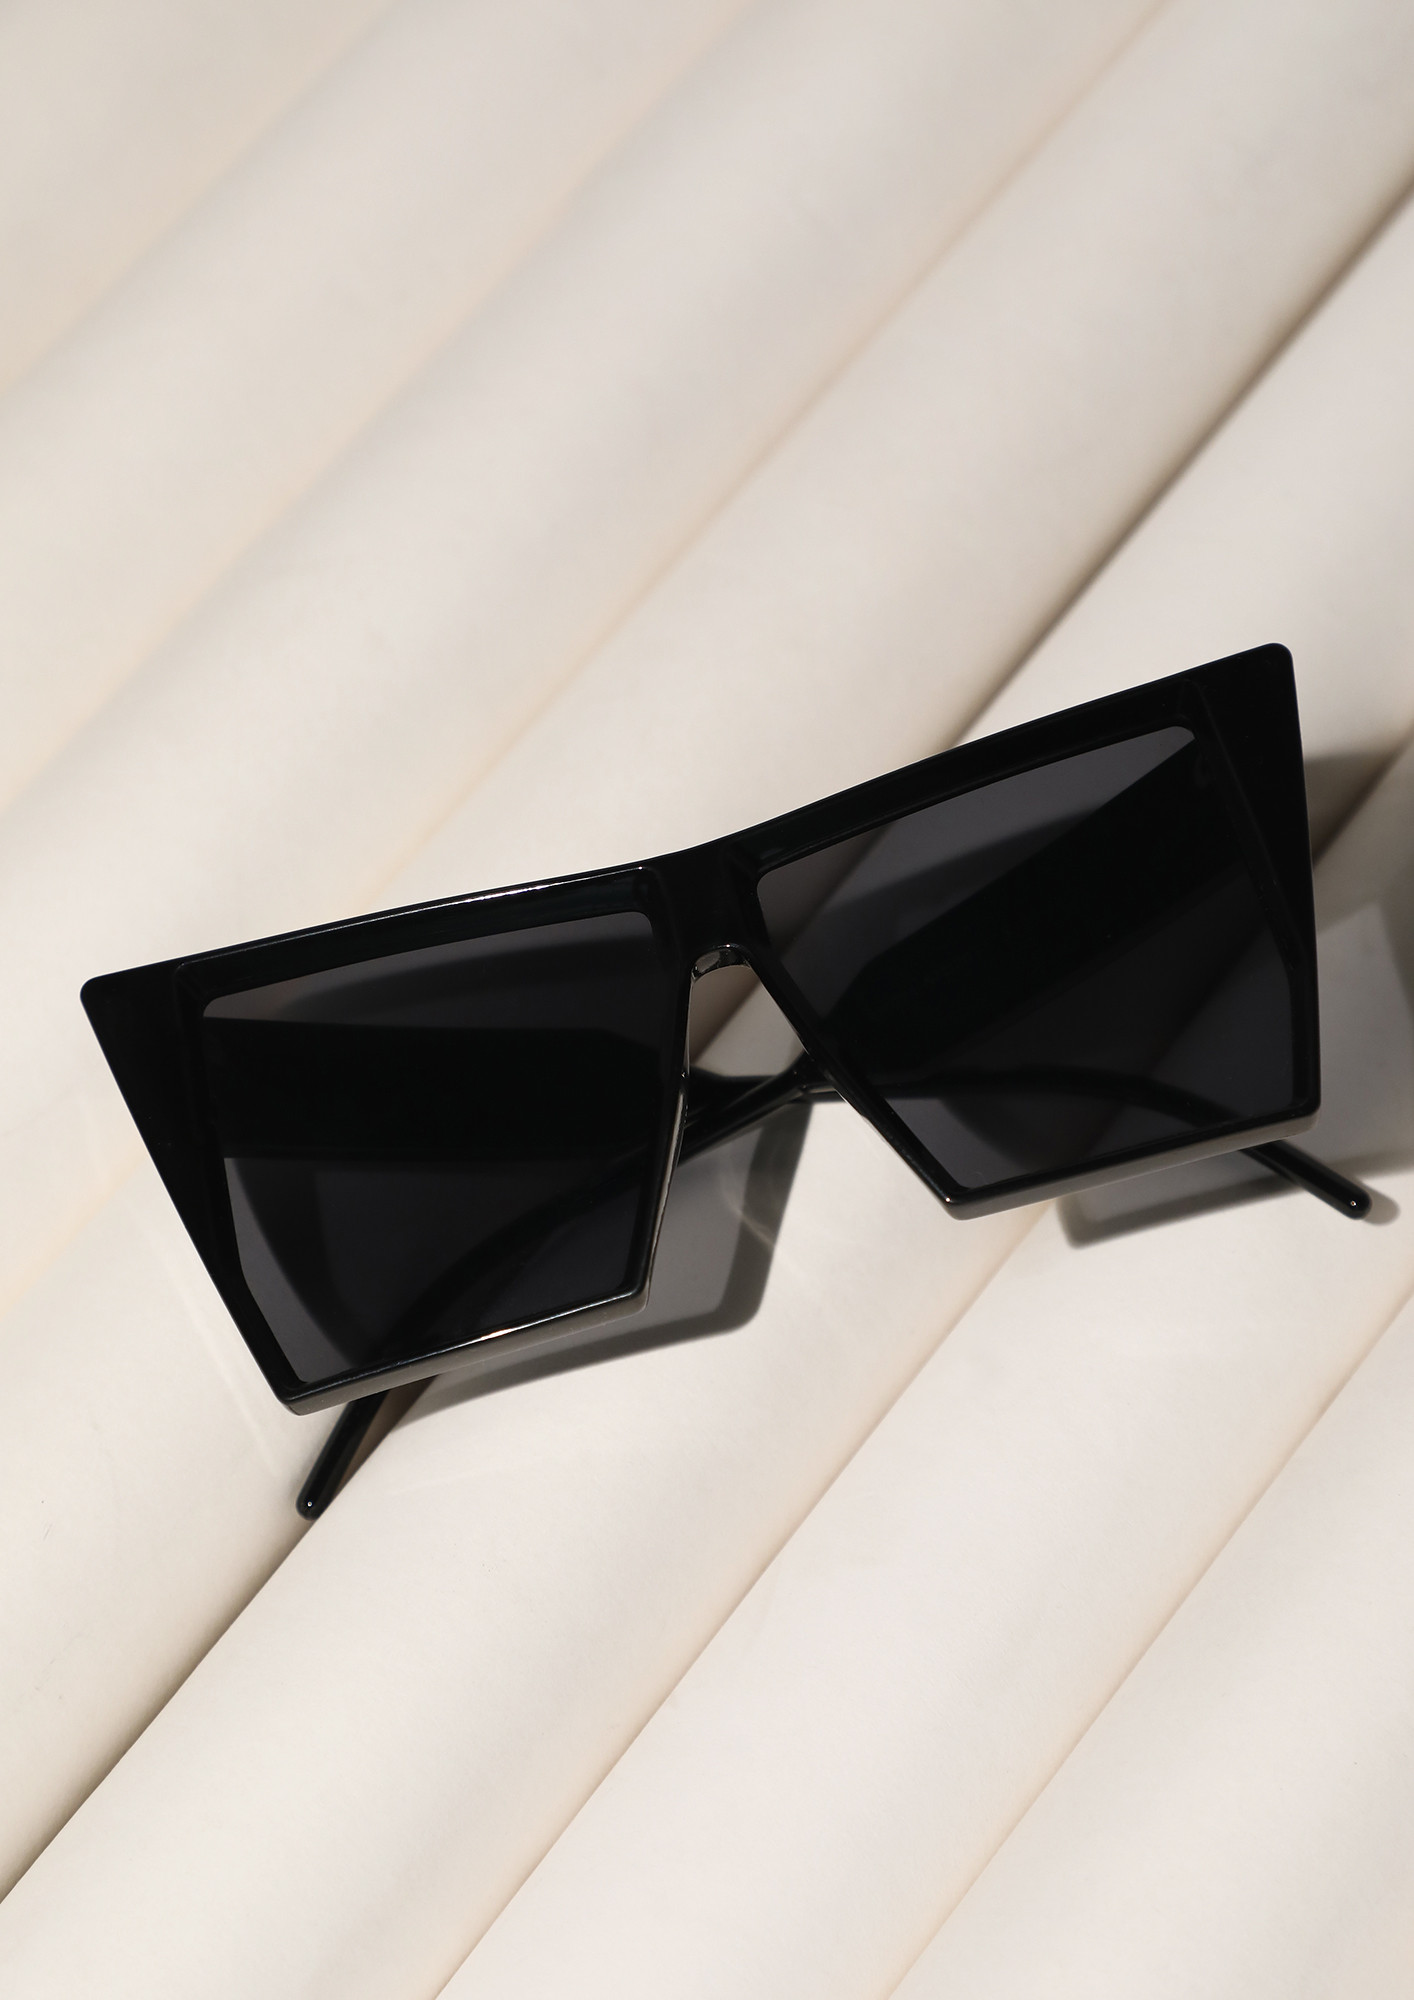 Buy Best Ray-Ban New Wayfarer Sunglasses Online